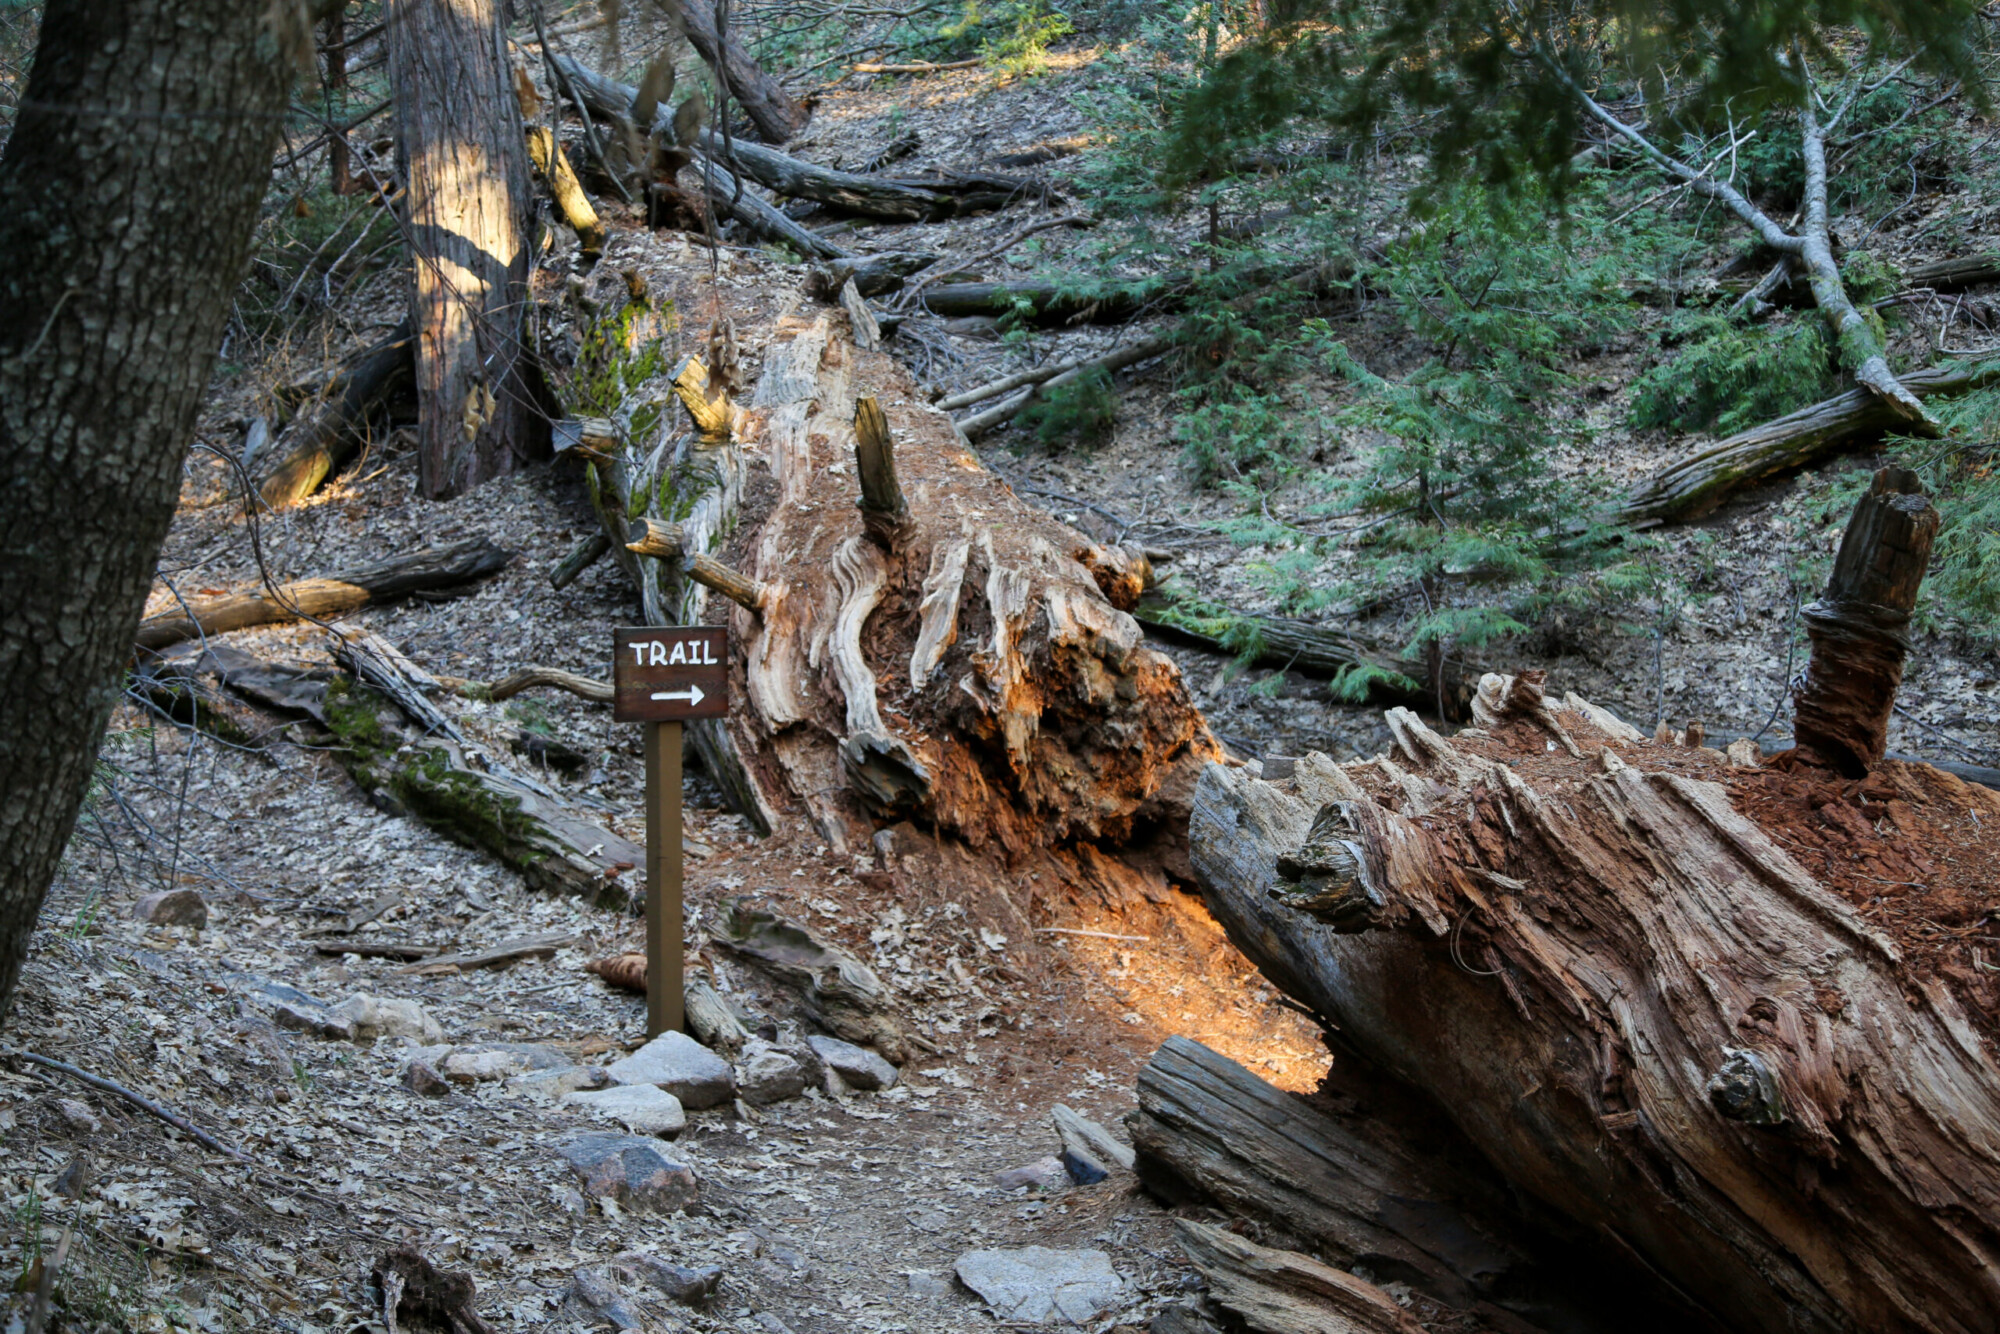 View of a trail sign and a fallen trees near Lake Arrowhead, California.